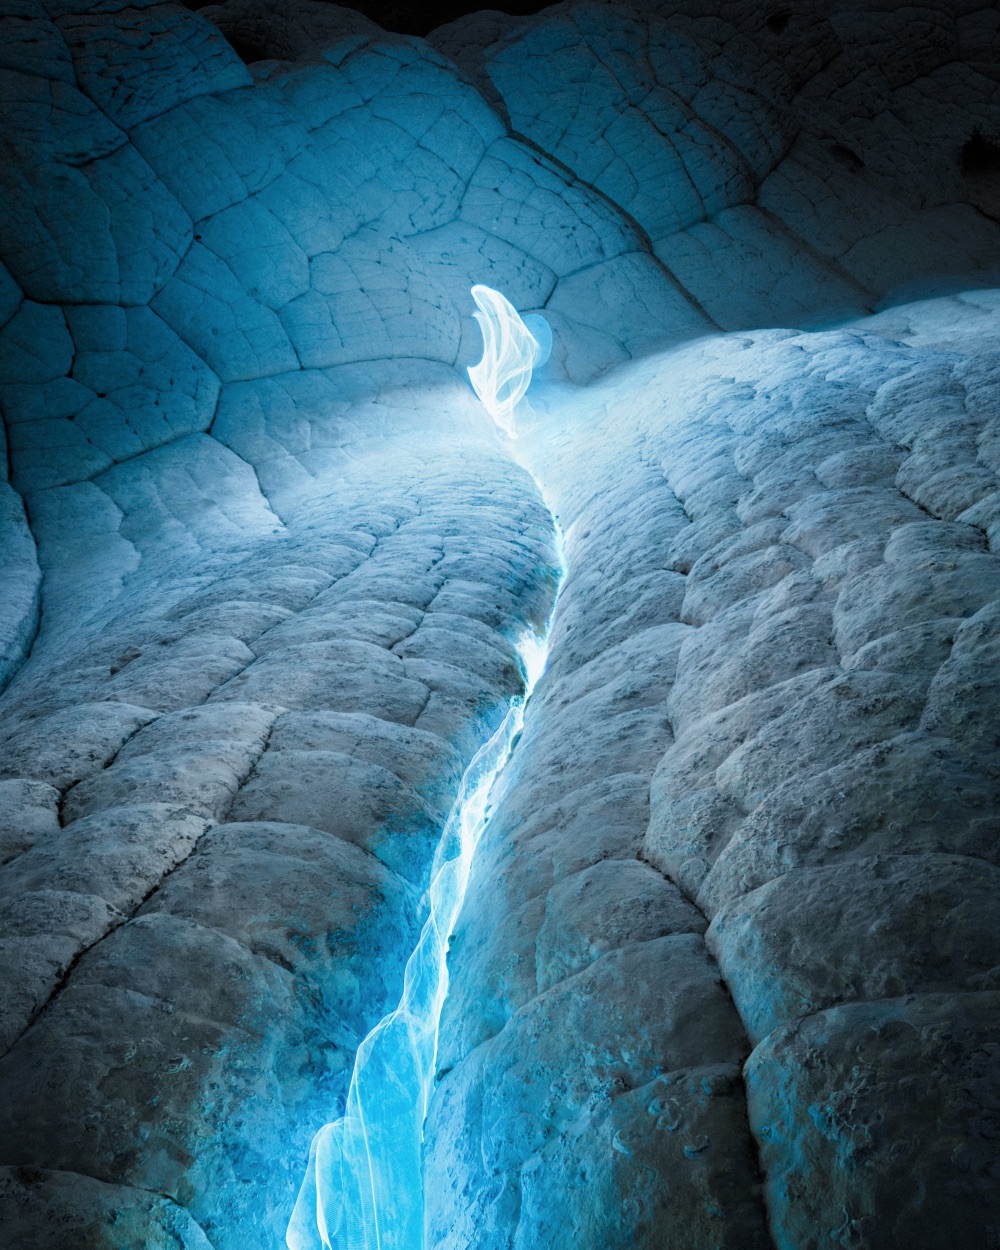 a blue shft of light glows in a rocky crack